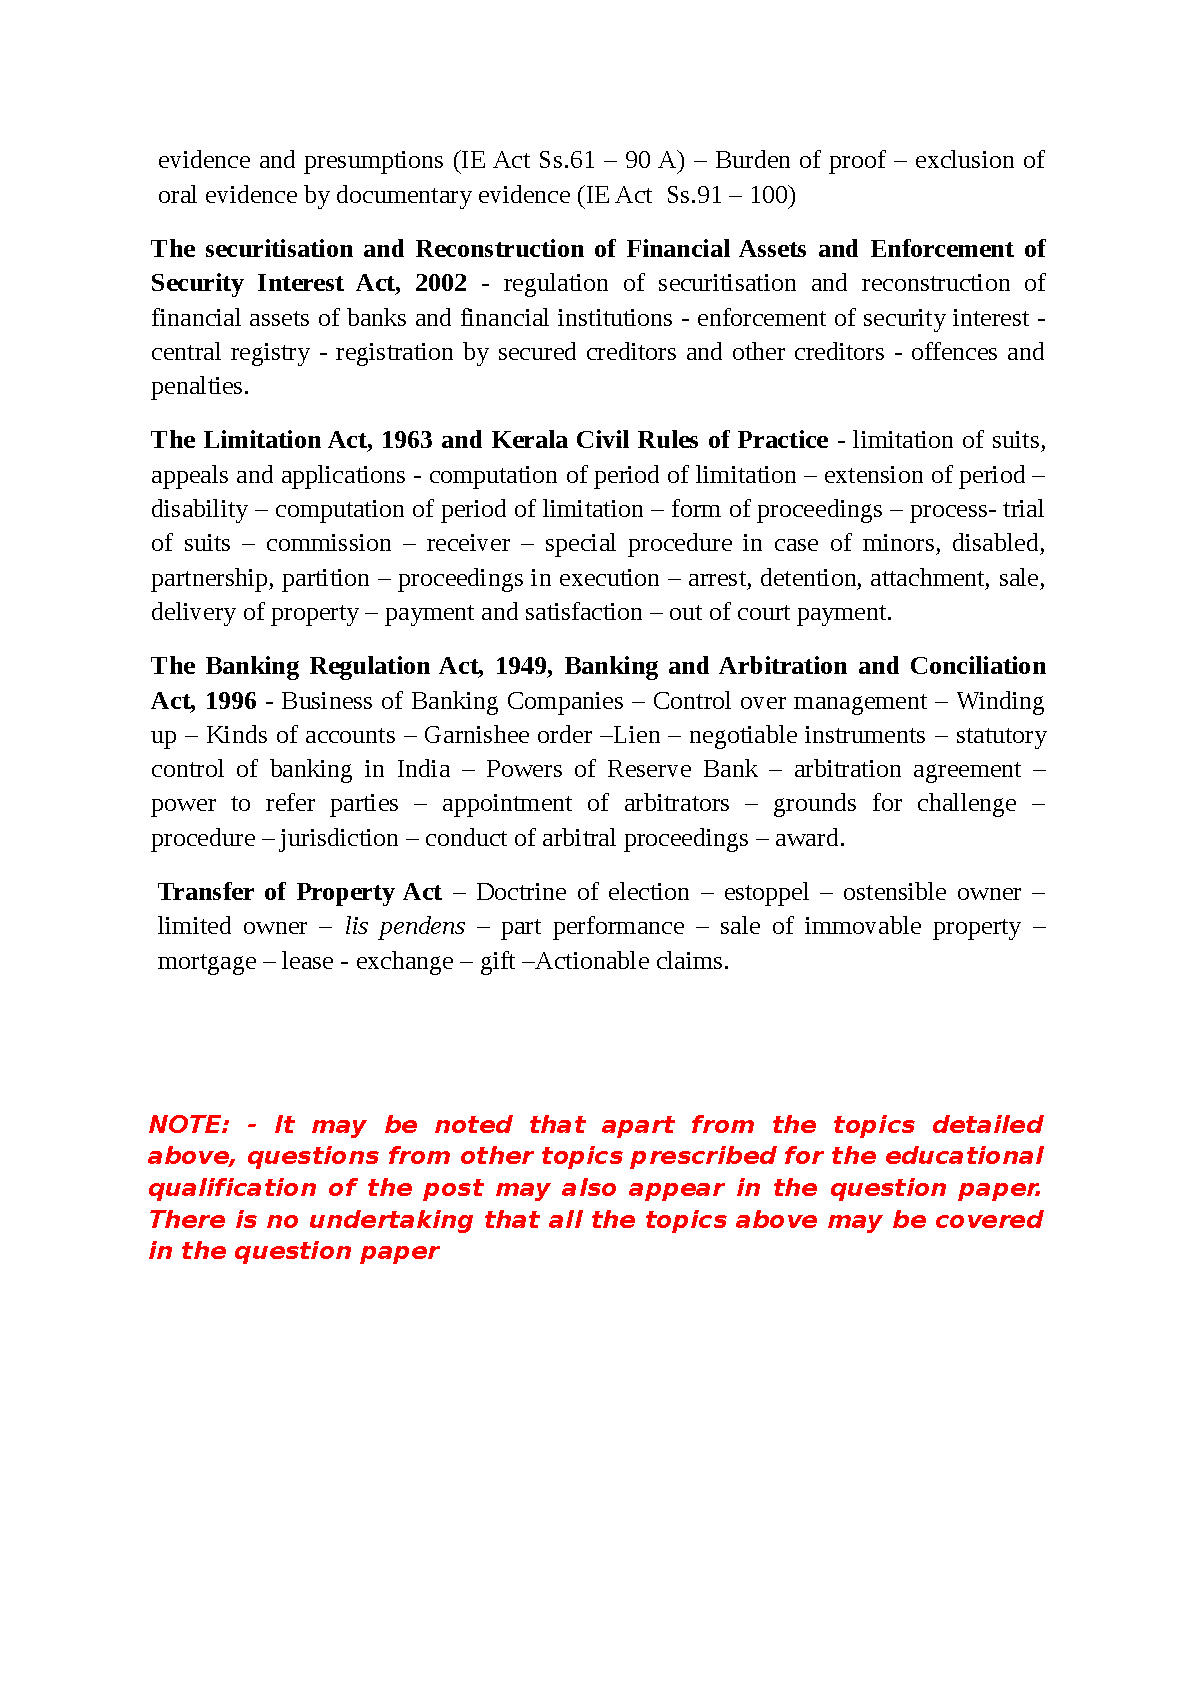 Kerala PSC Law Officer Exam Syllabus Aug 2019 - Notification Image 4